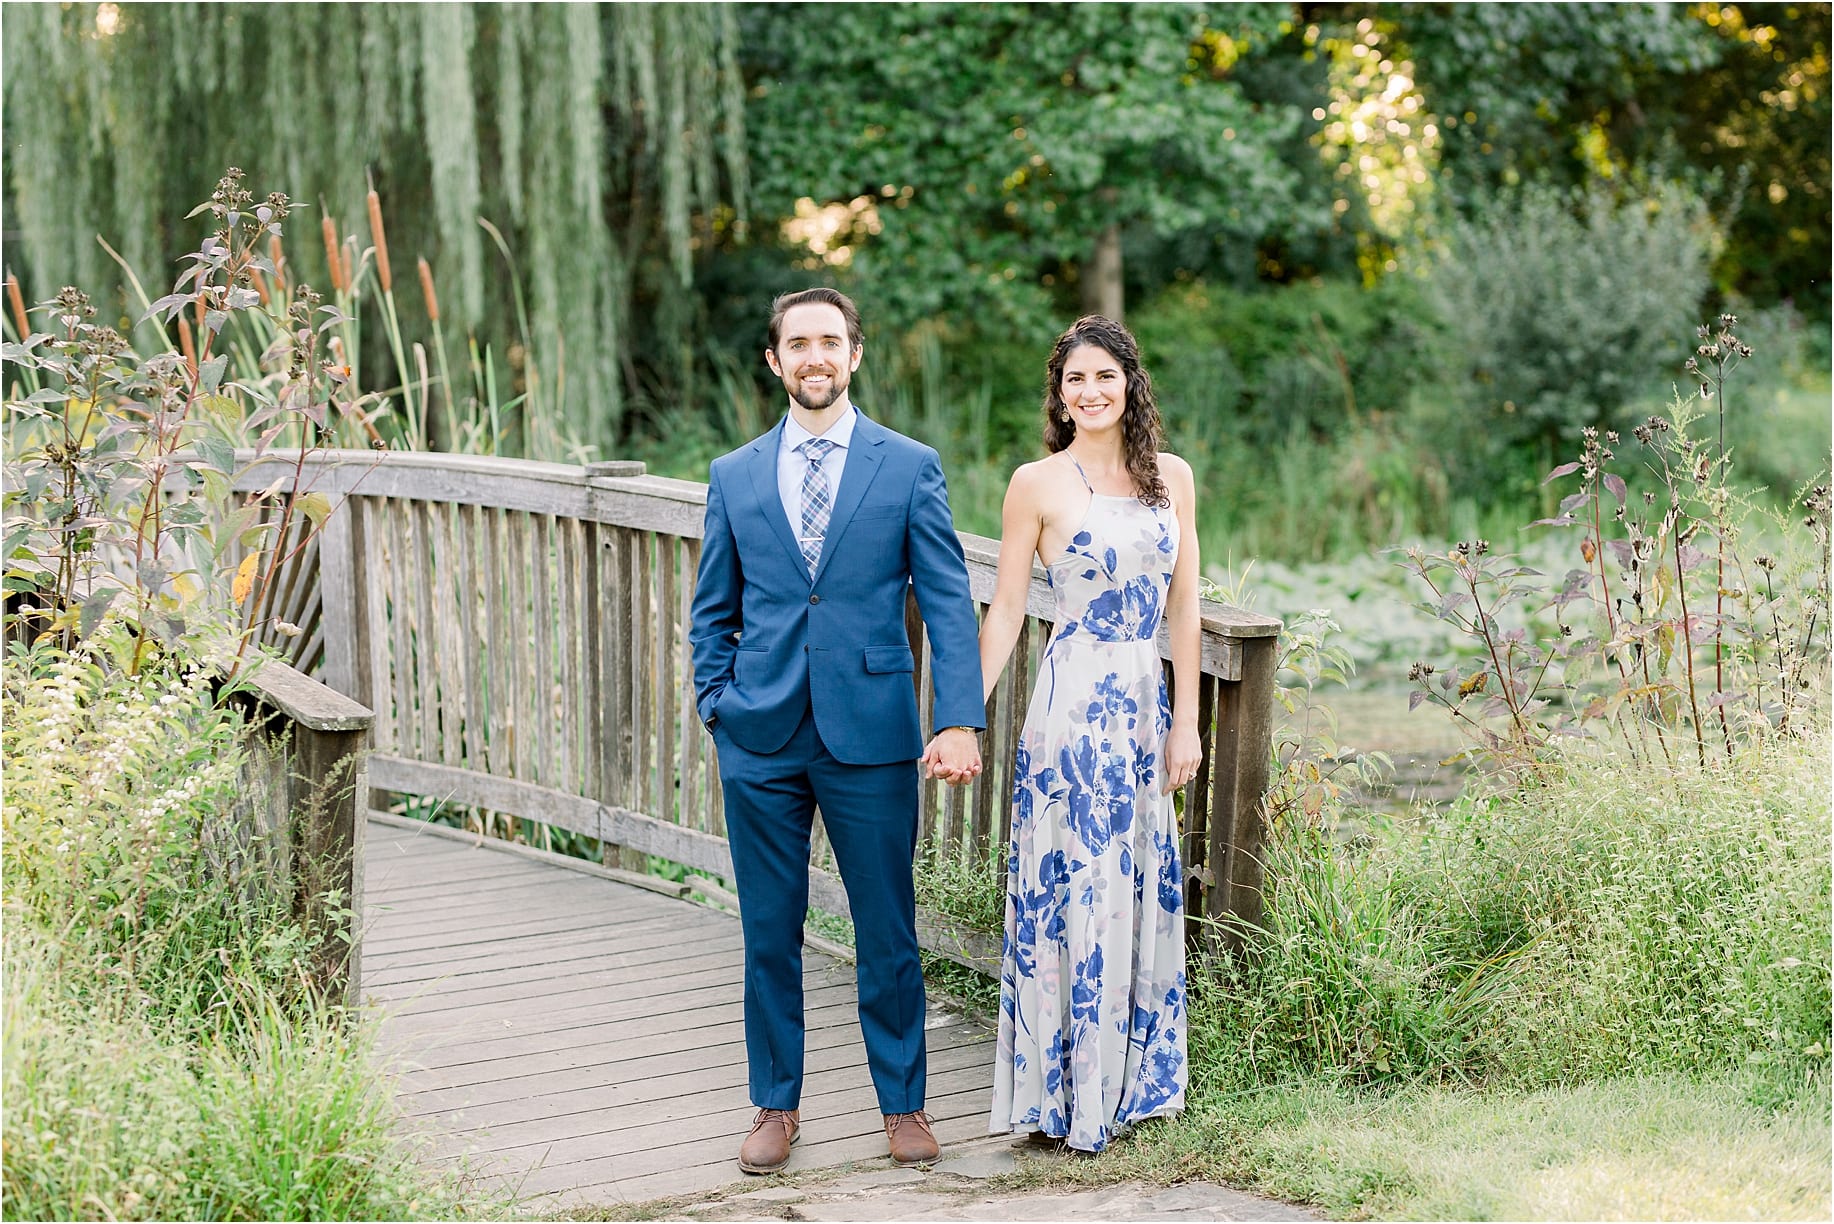 Meadowlark Botanical Gardens Engagements DC wedding photographer erika mills_0008.jpg